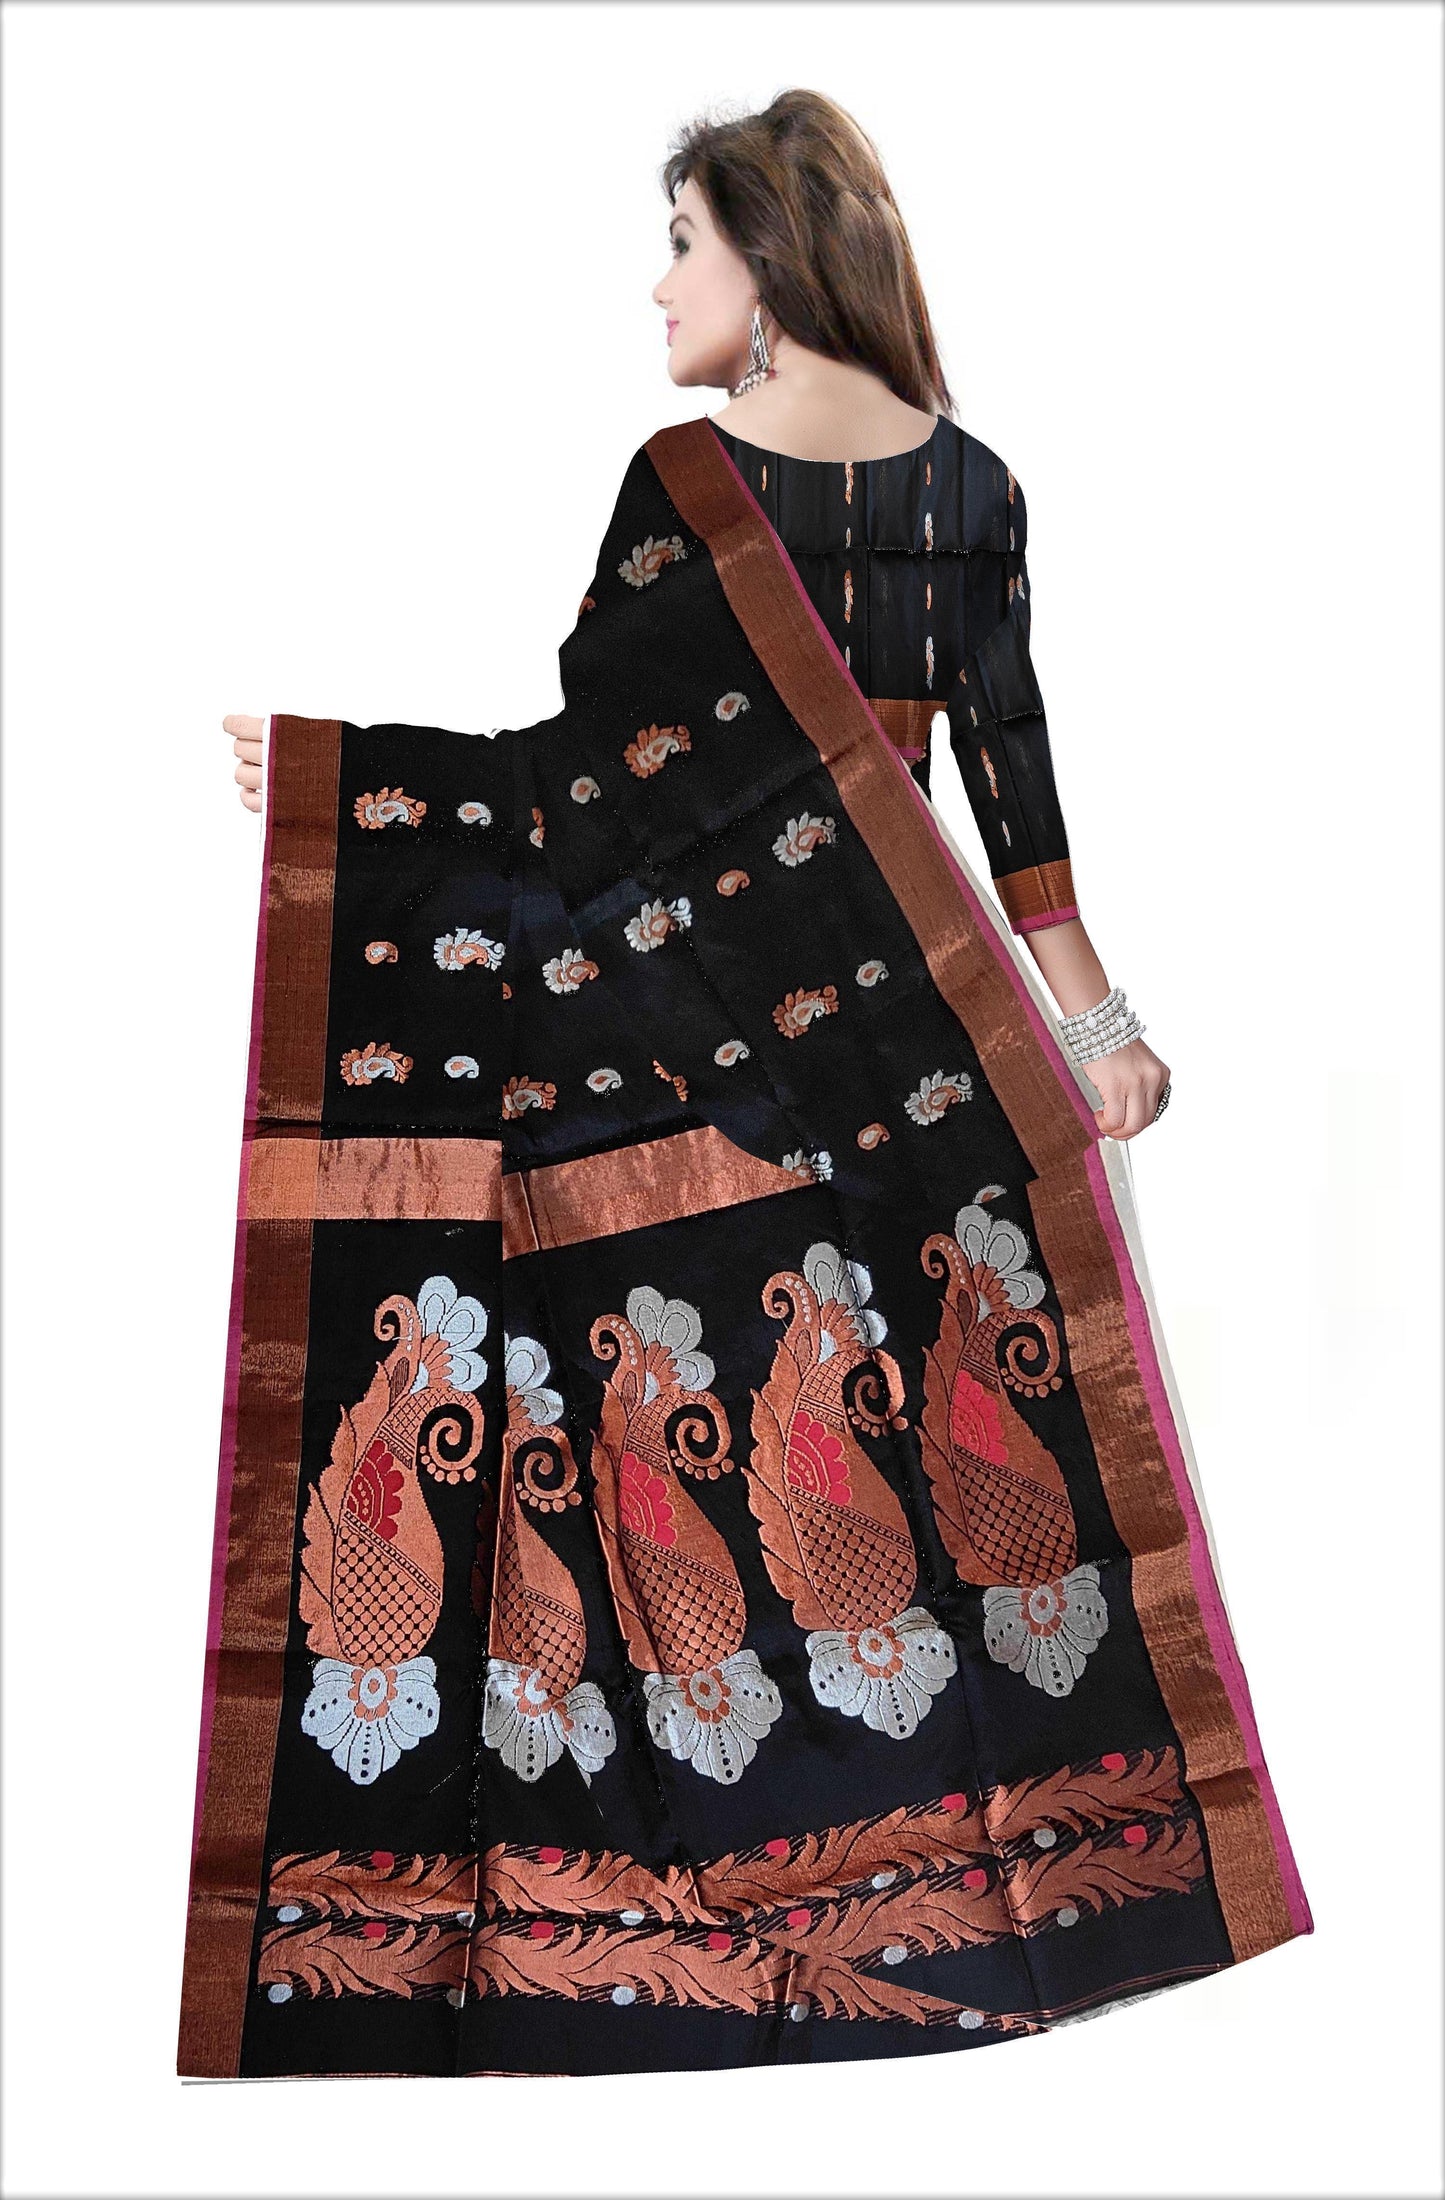 Pradip Fabrics Woven Black color Soft Handloom Saree